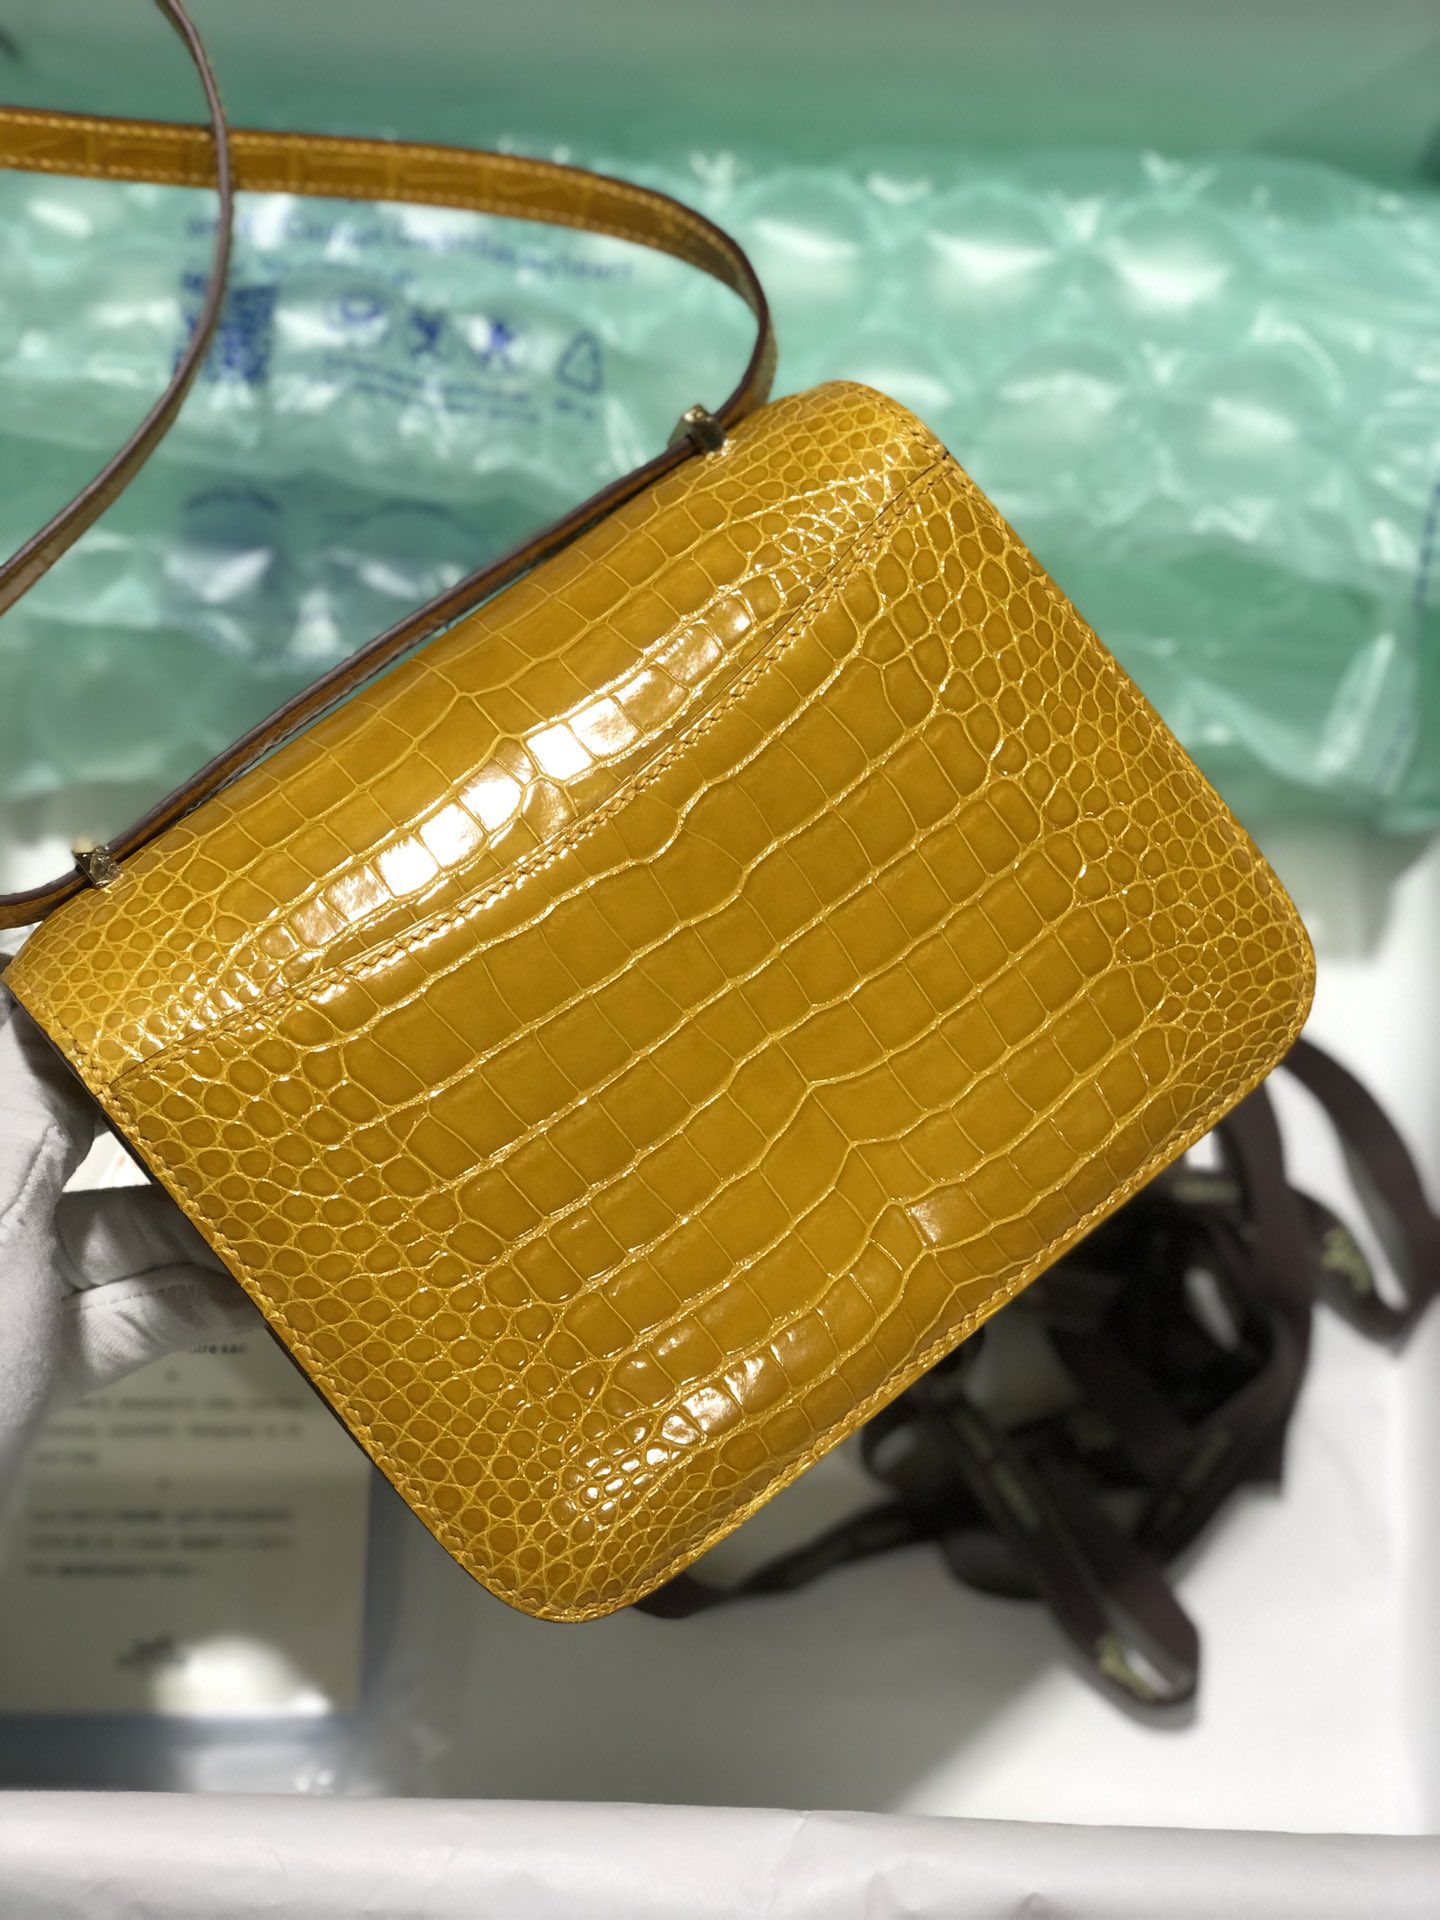 Luxury Hermes 9D Ambre Yellow Shiny Crocodile Constance Bag18CM Gold Hardware